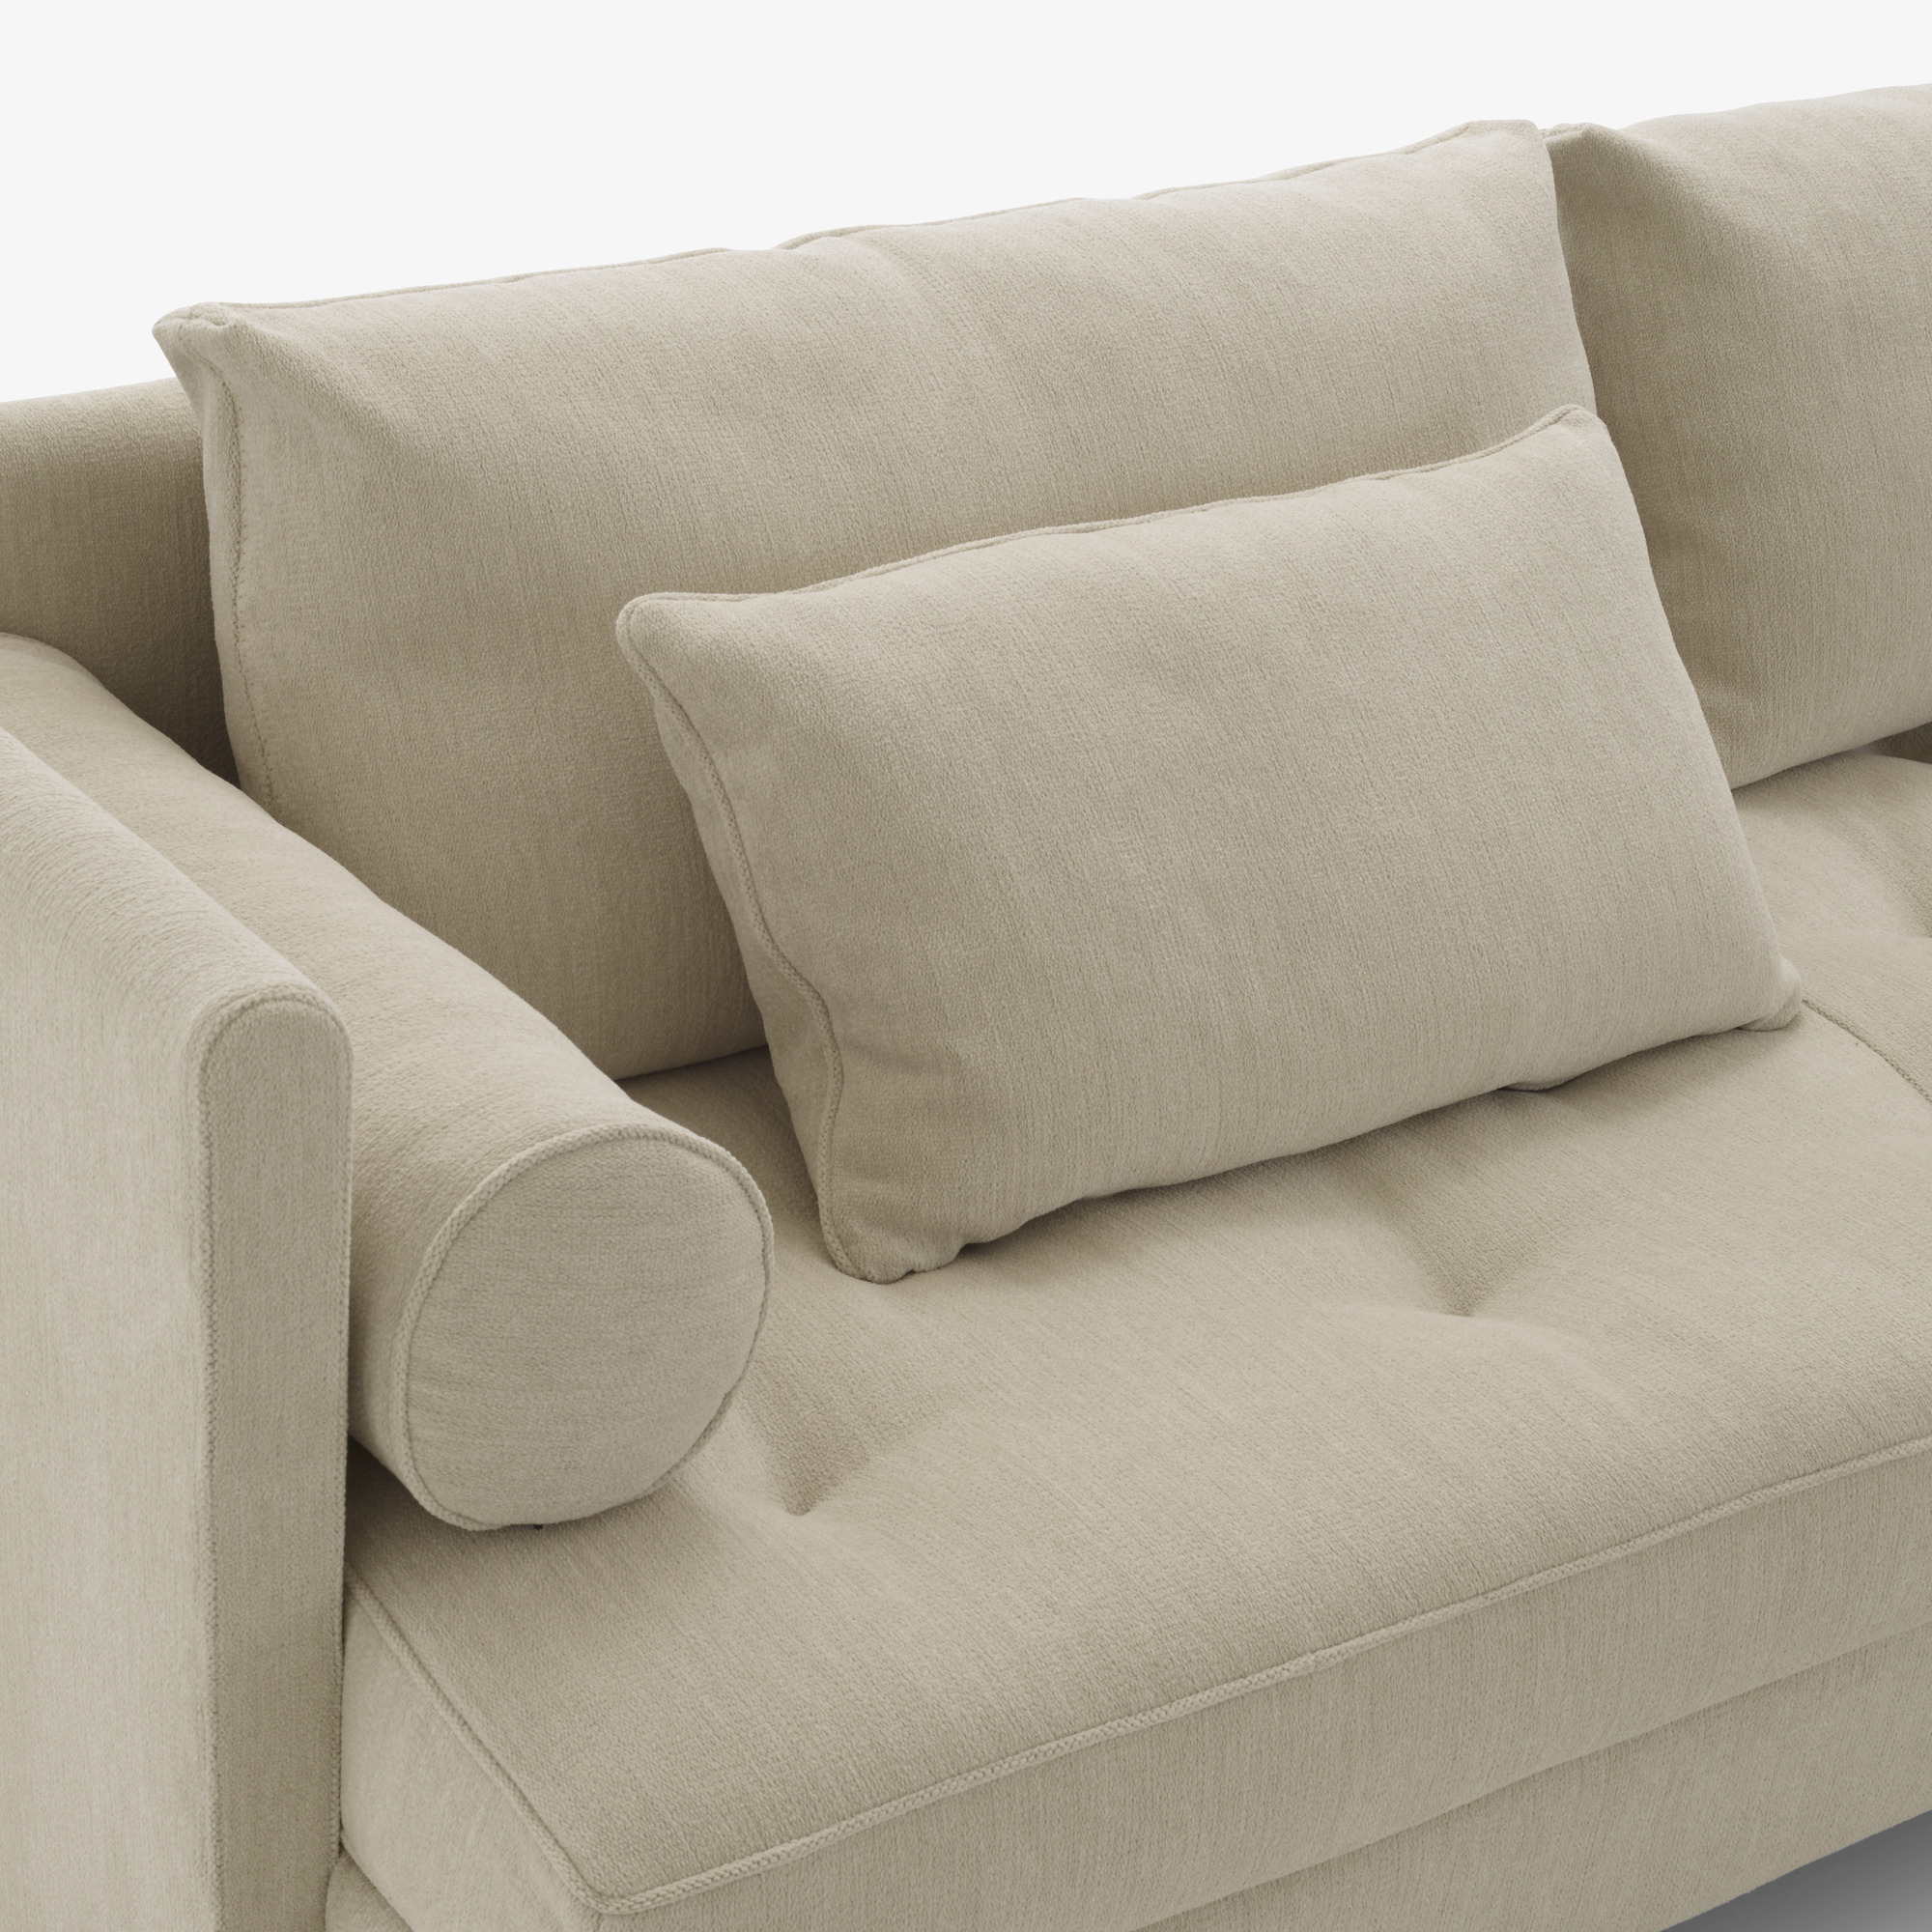 Image 1-arm sofa 5